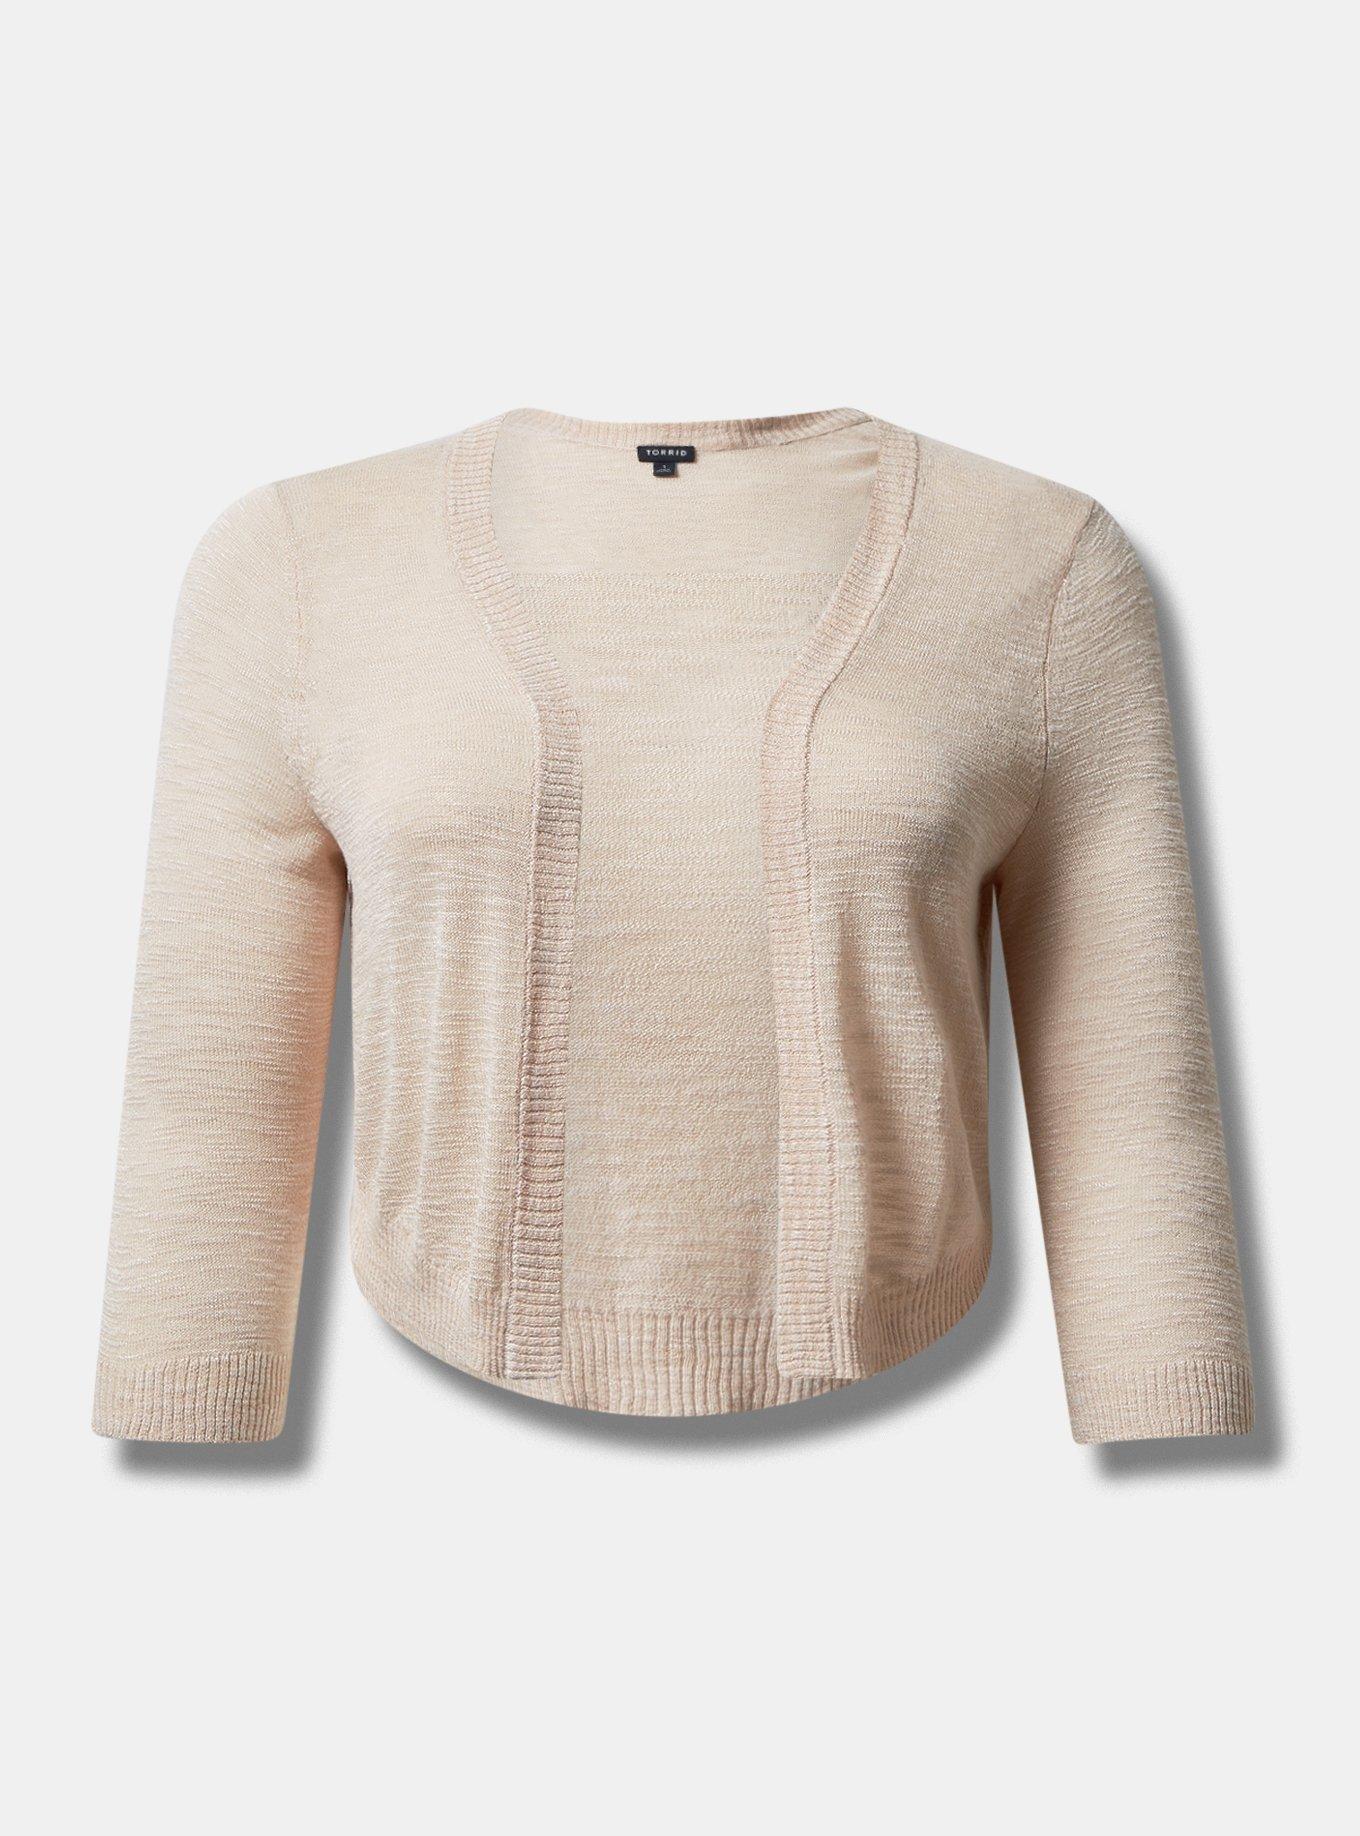 Plus Size - Slub Shrug 3/4 Sleeve Cropped Sweater - Torrid